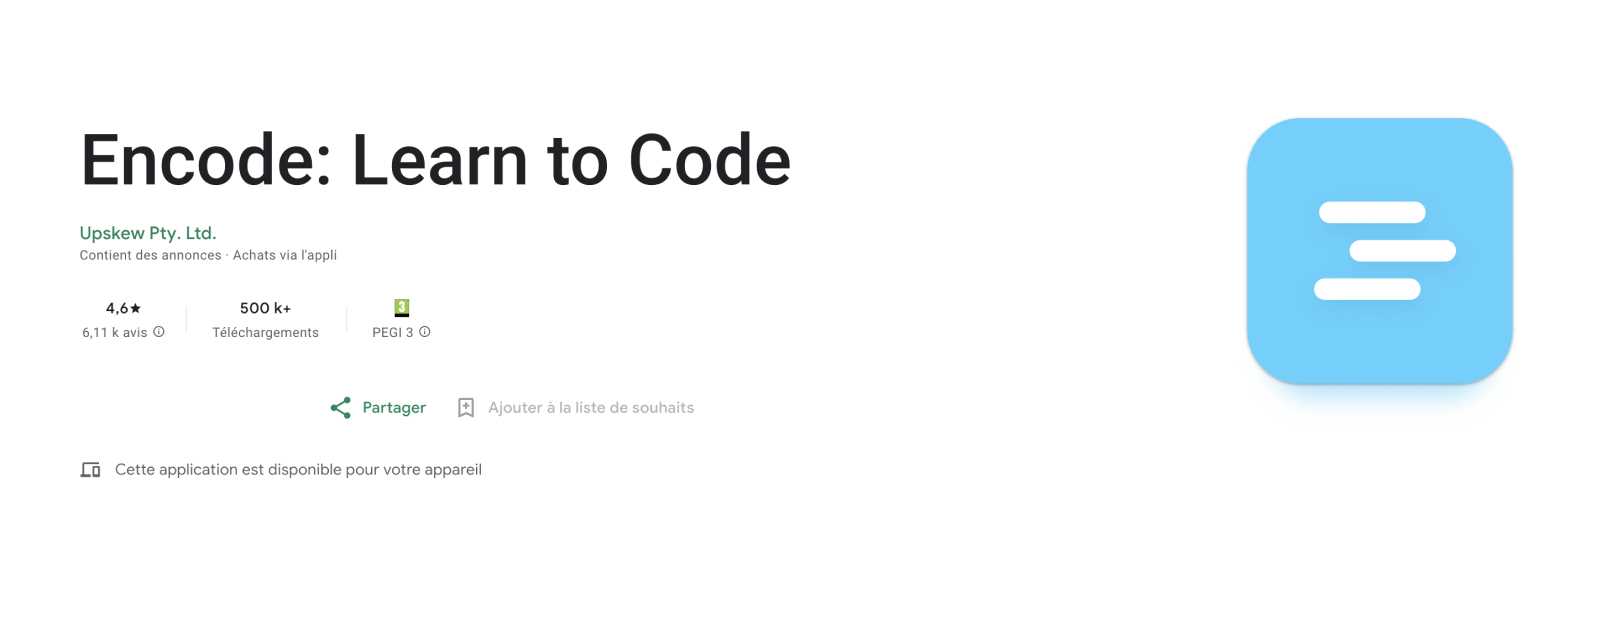 Encode : Learn to Code